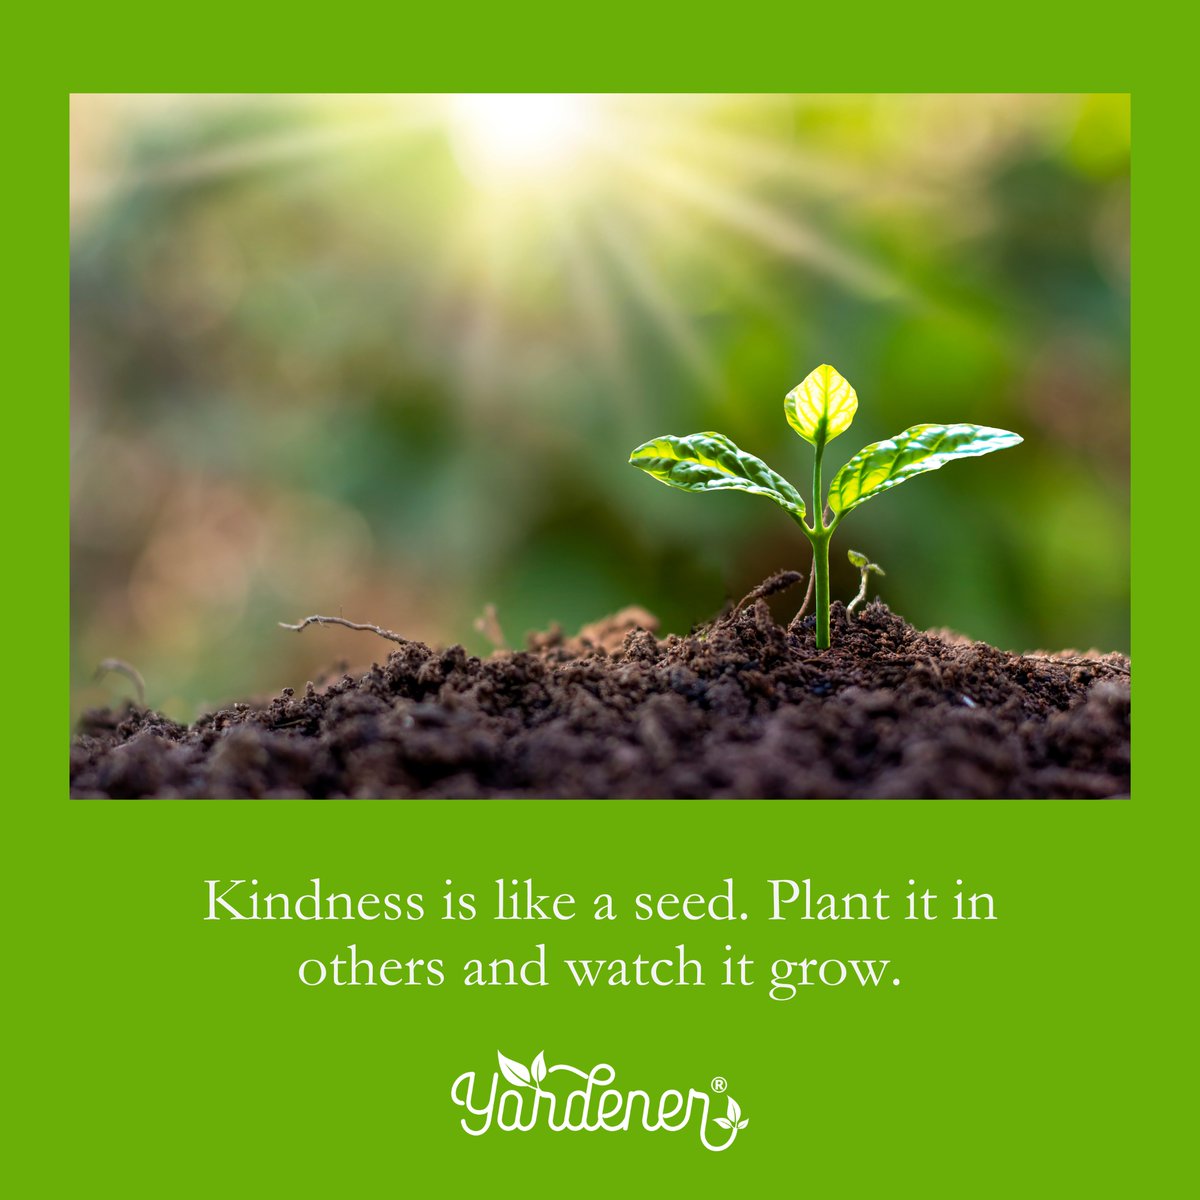 Be kind.
Do gardening.
Grow and let others grow. 

#GardeningX #gardeningtherapy #Motivation